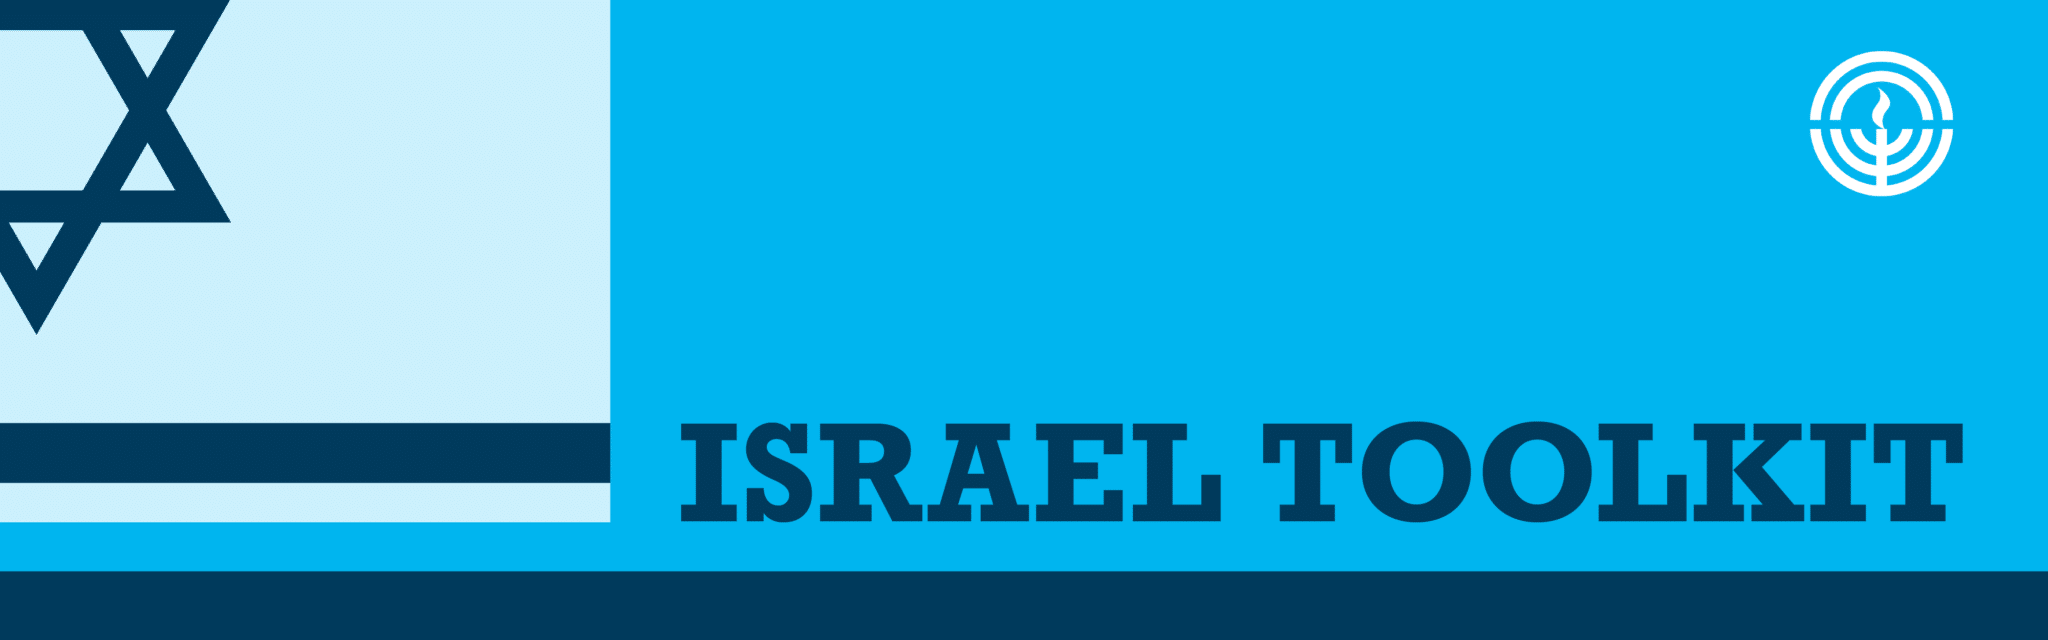 Israel Toolkit Banner | Jewish Federation of Broward County